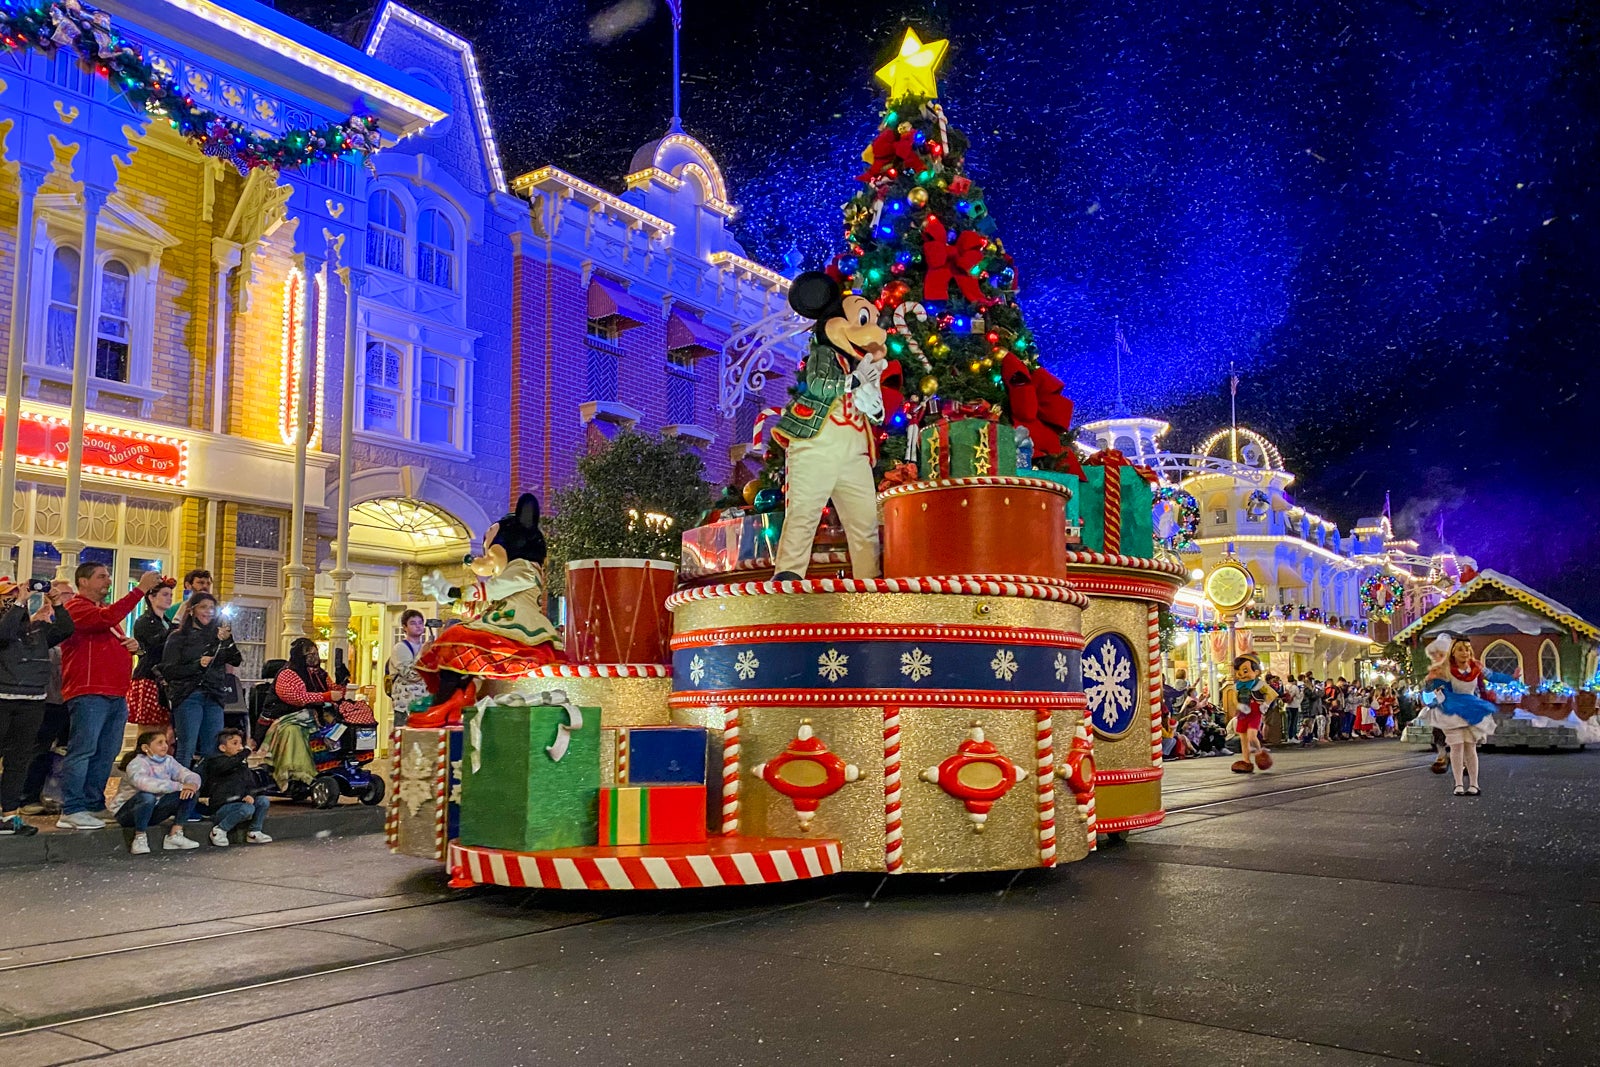 Mickey float in parade